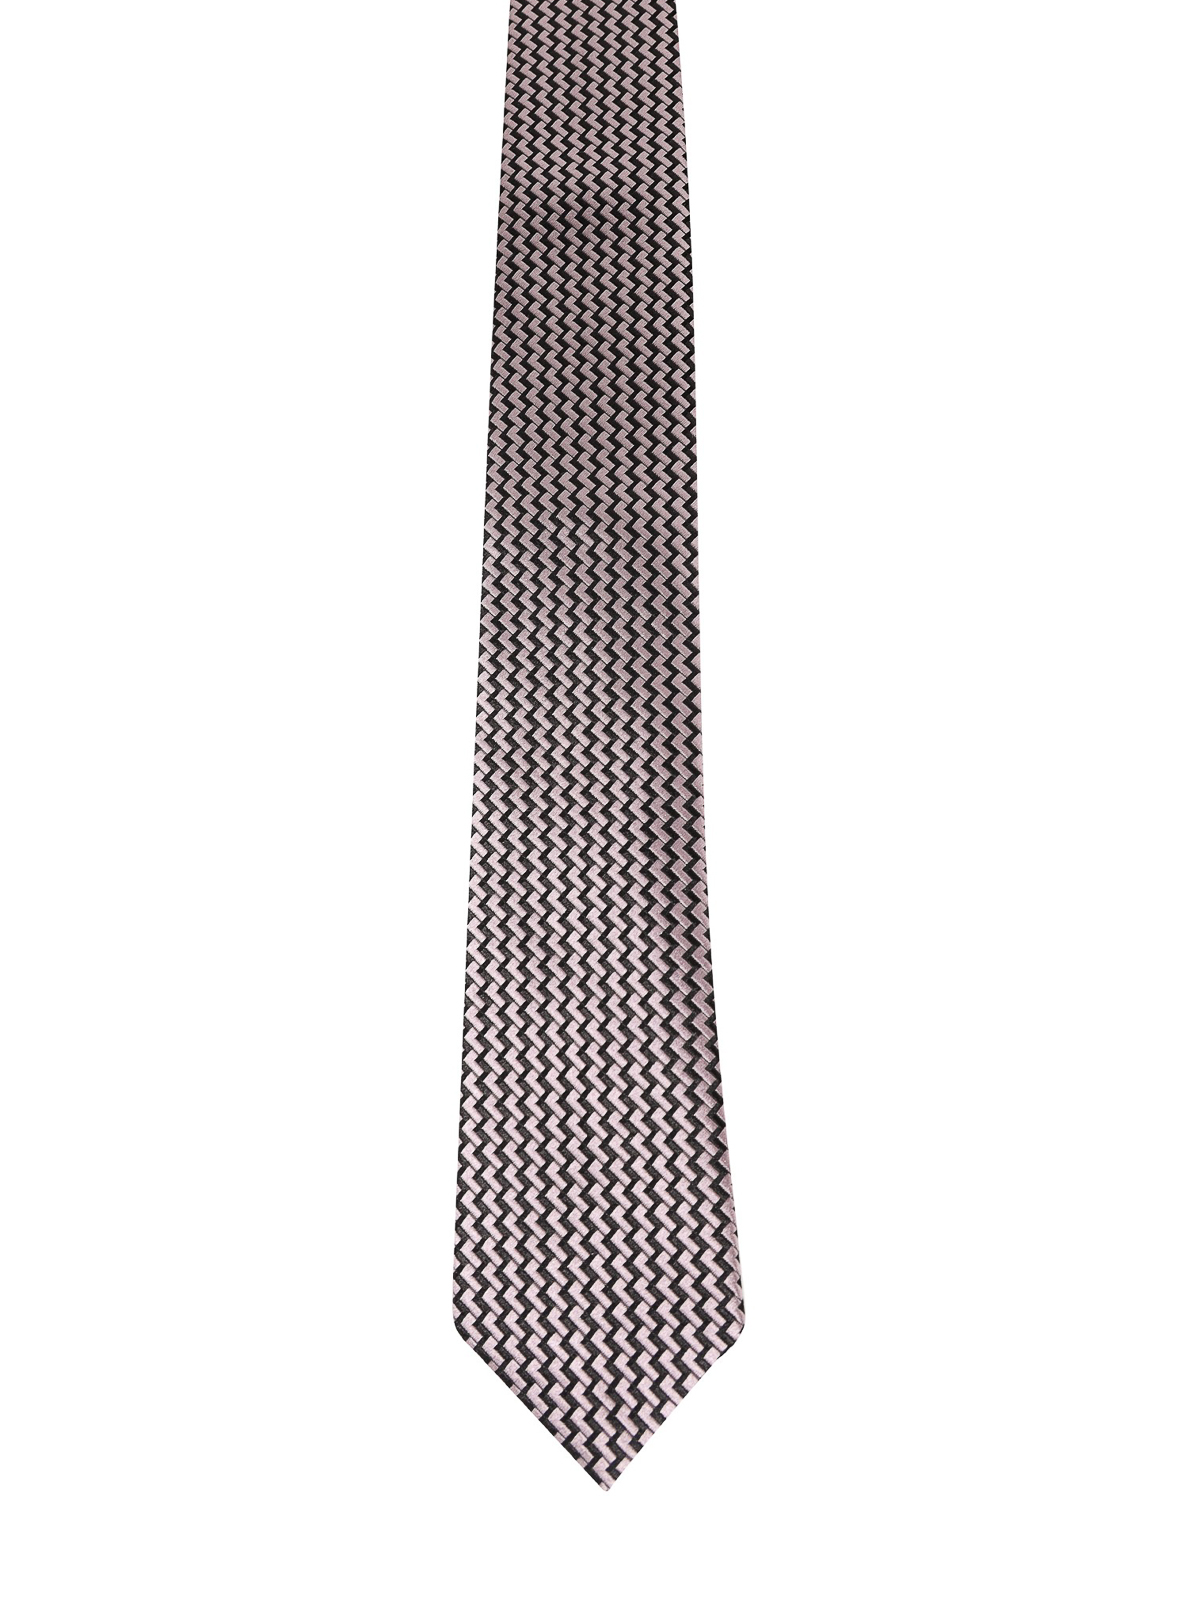 Tom Ford Krawatte  9TF02  Geometrisch Gold-coloured    Seide